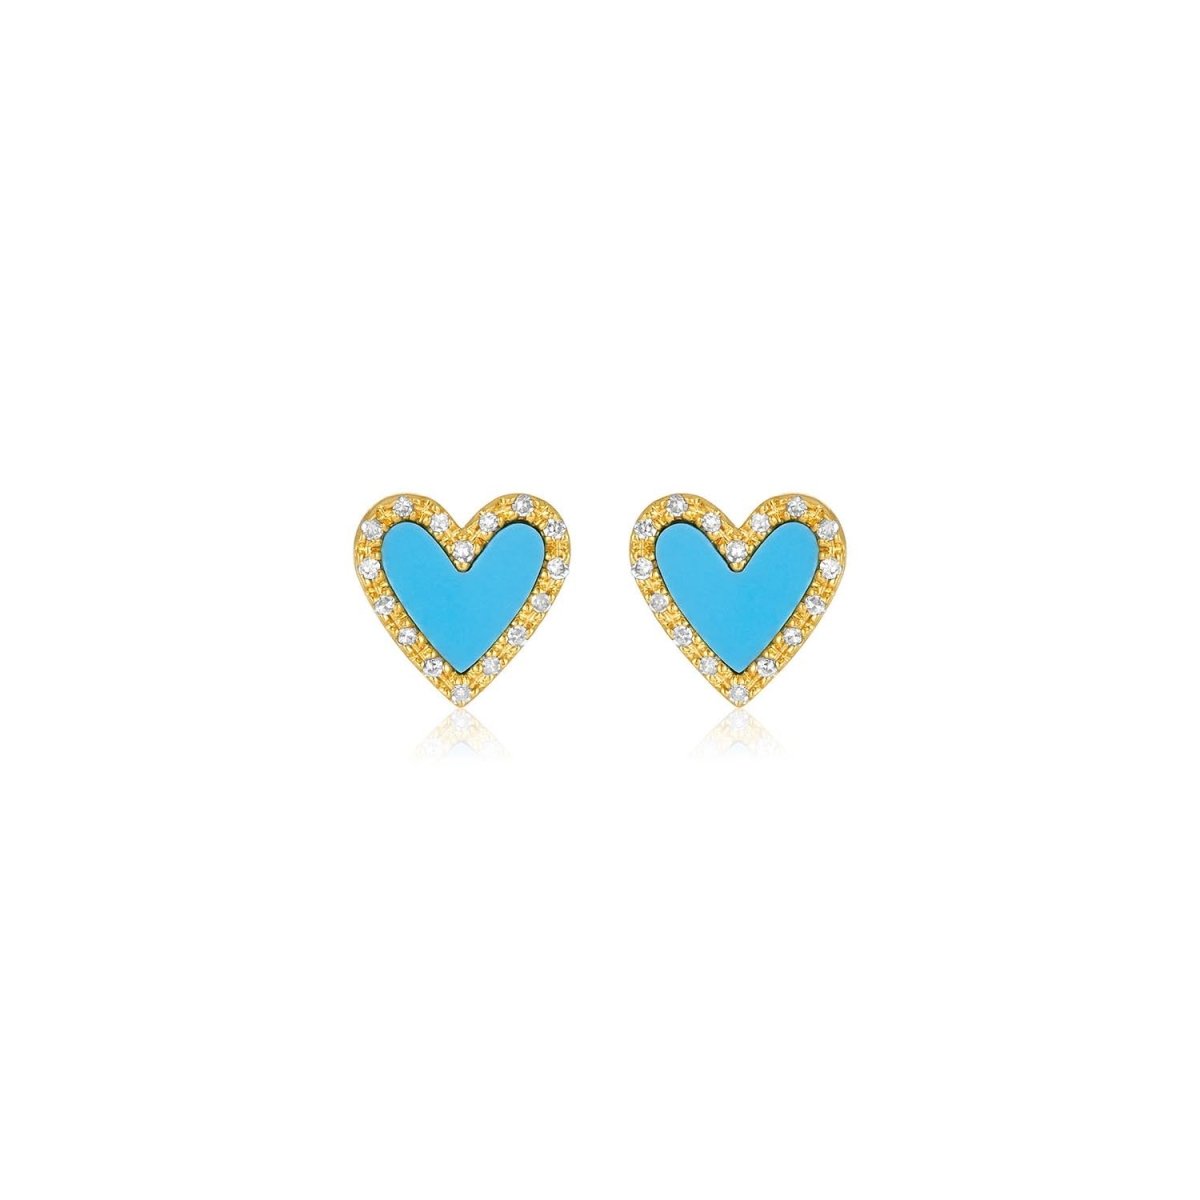 Heart Earrings | Gemstones, Gold, and Diamonds